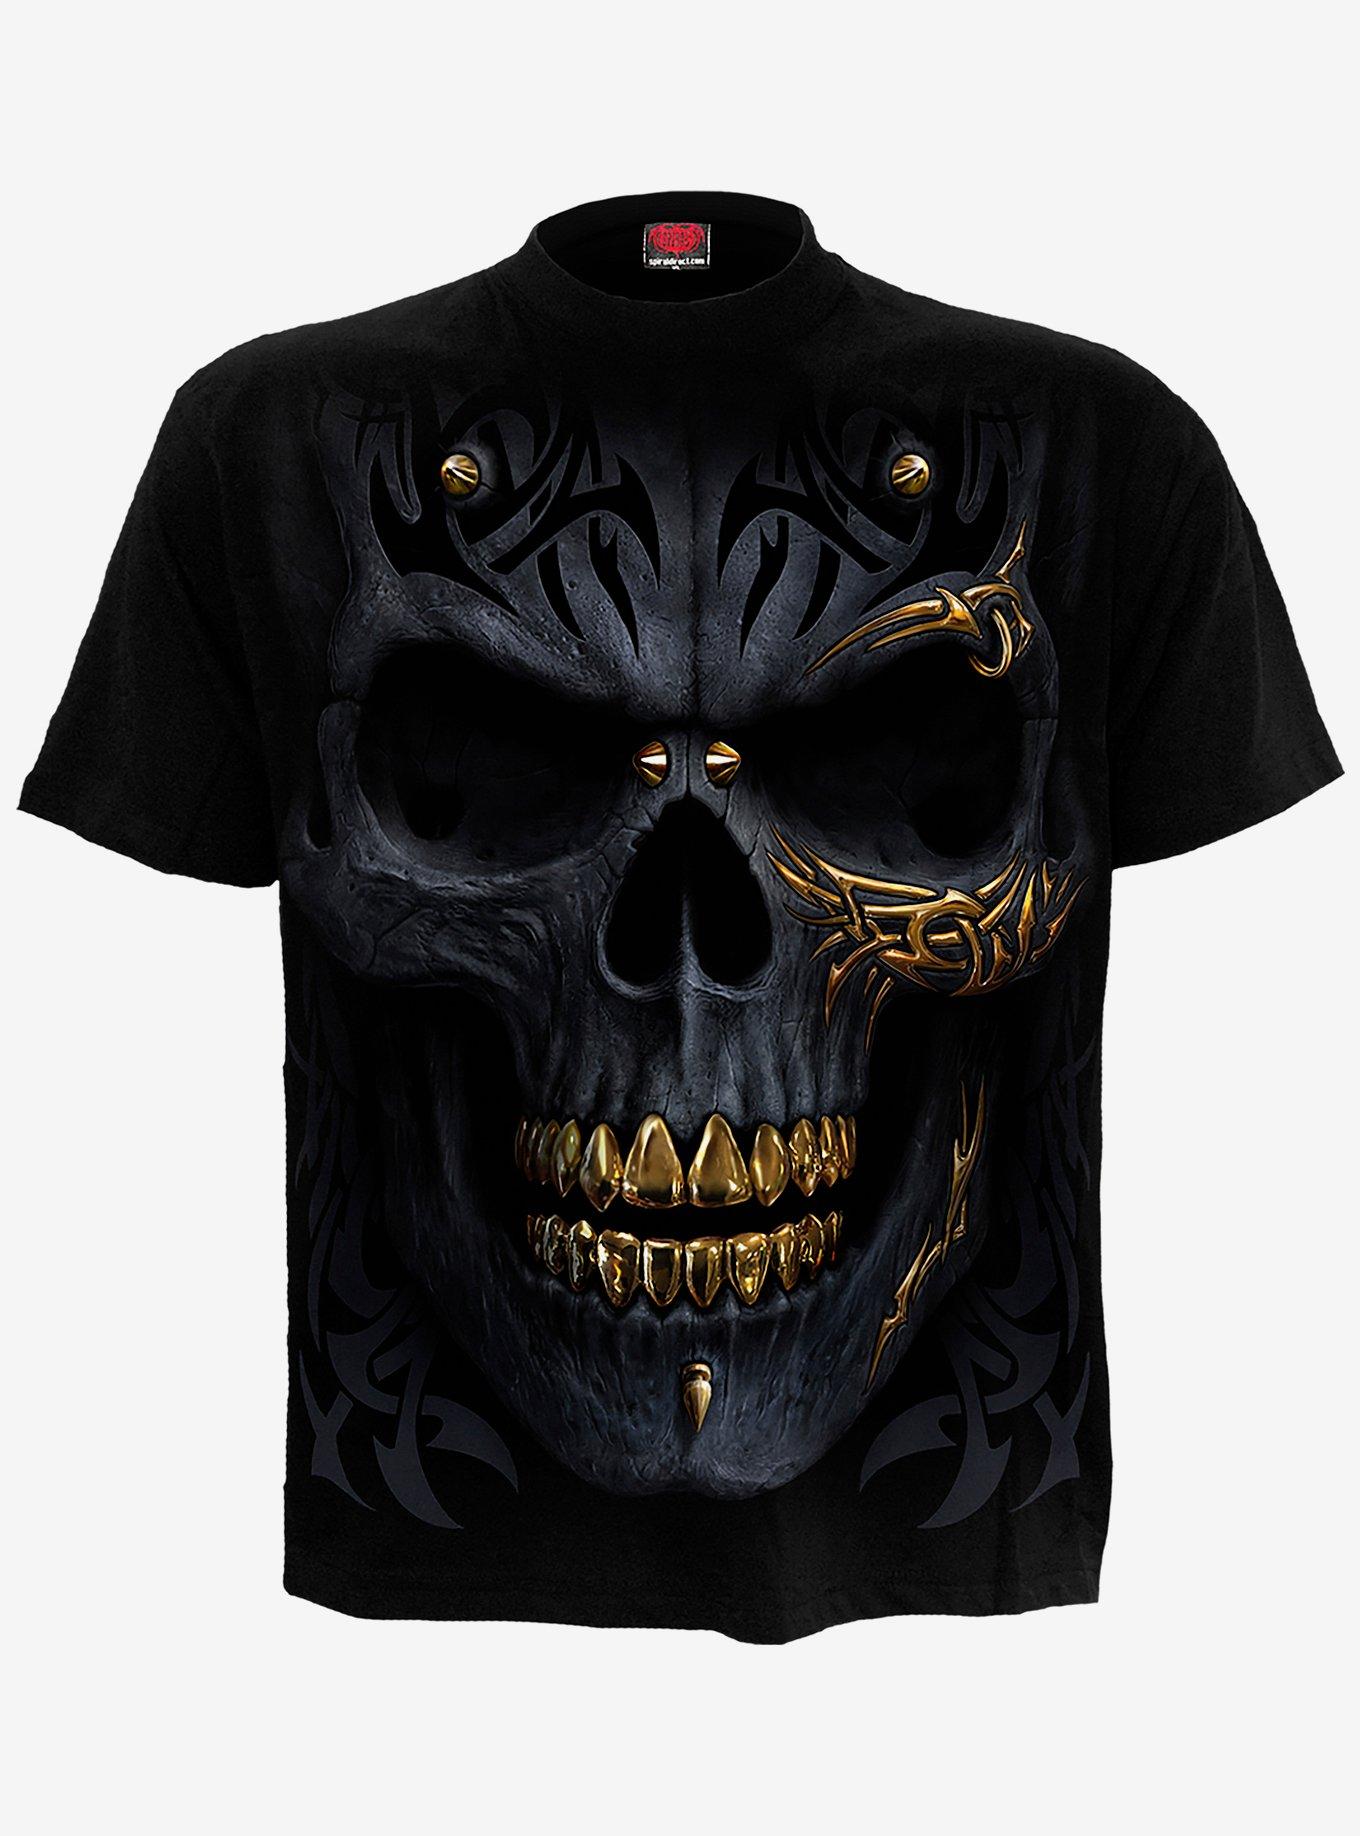 Black T-Shirt | Gold Topic Skull Hot